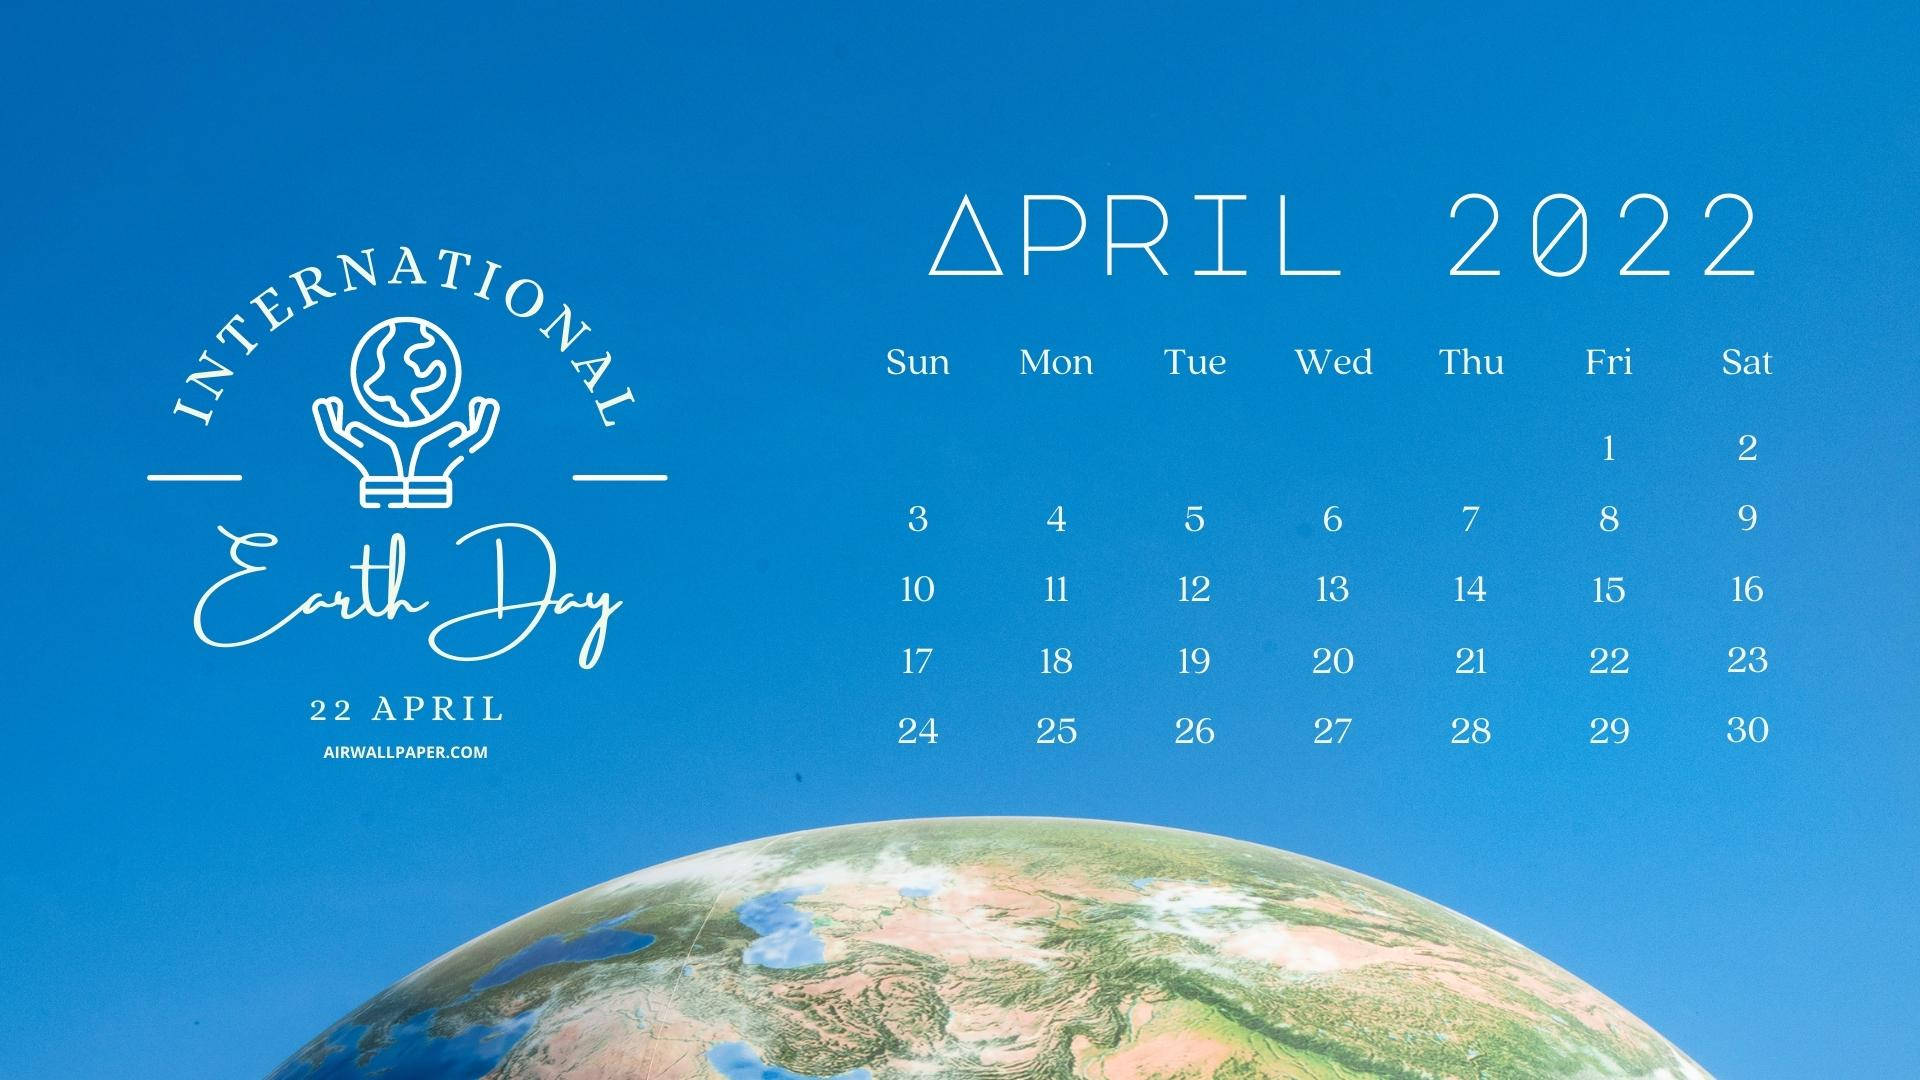 International Earth Day April 2022 Calendar Wallpaper